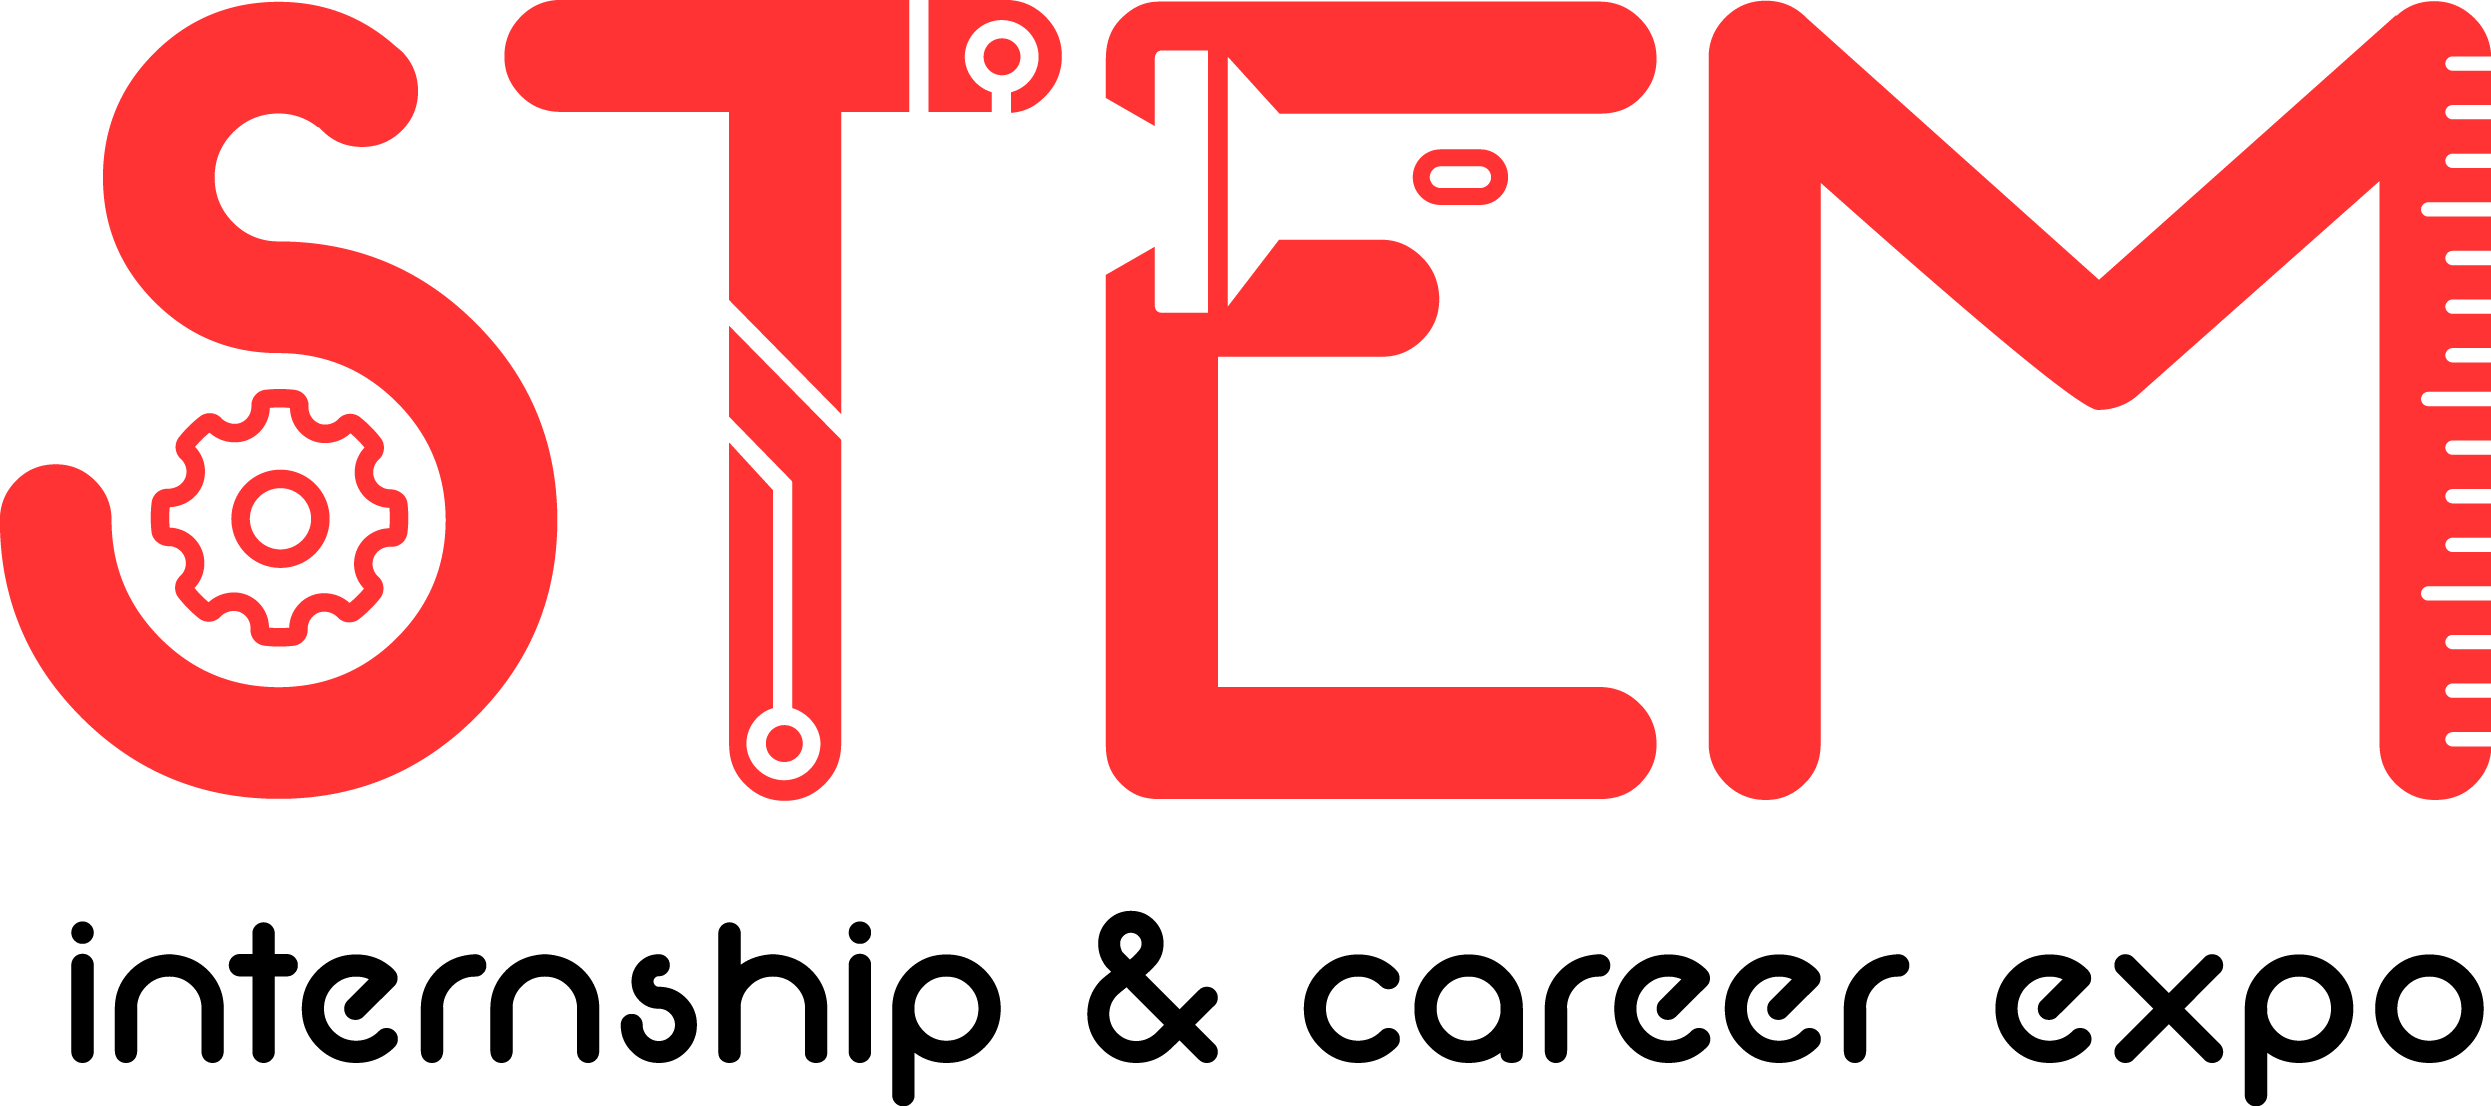 STEM internship and career expo